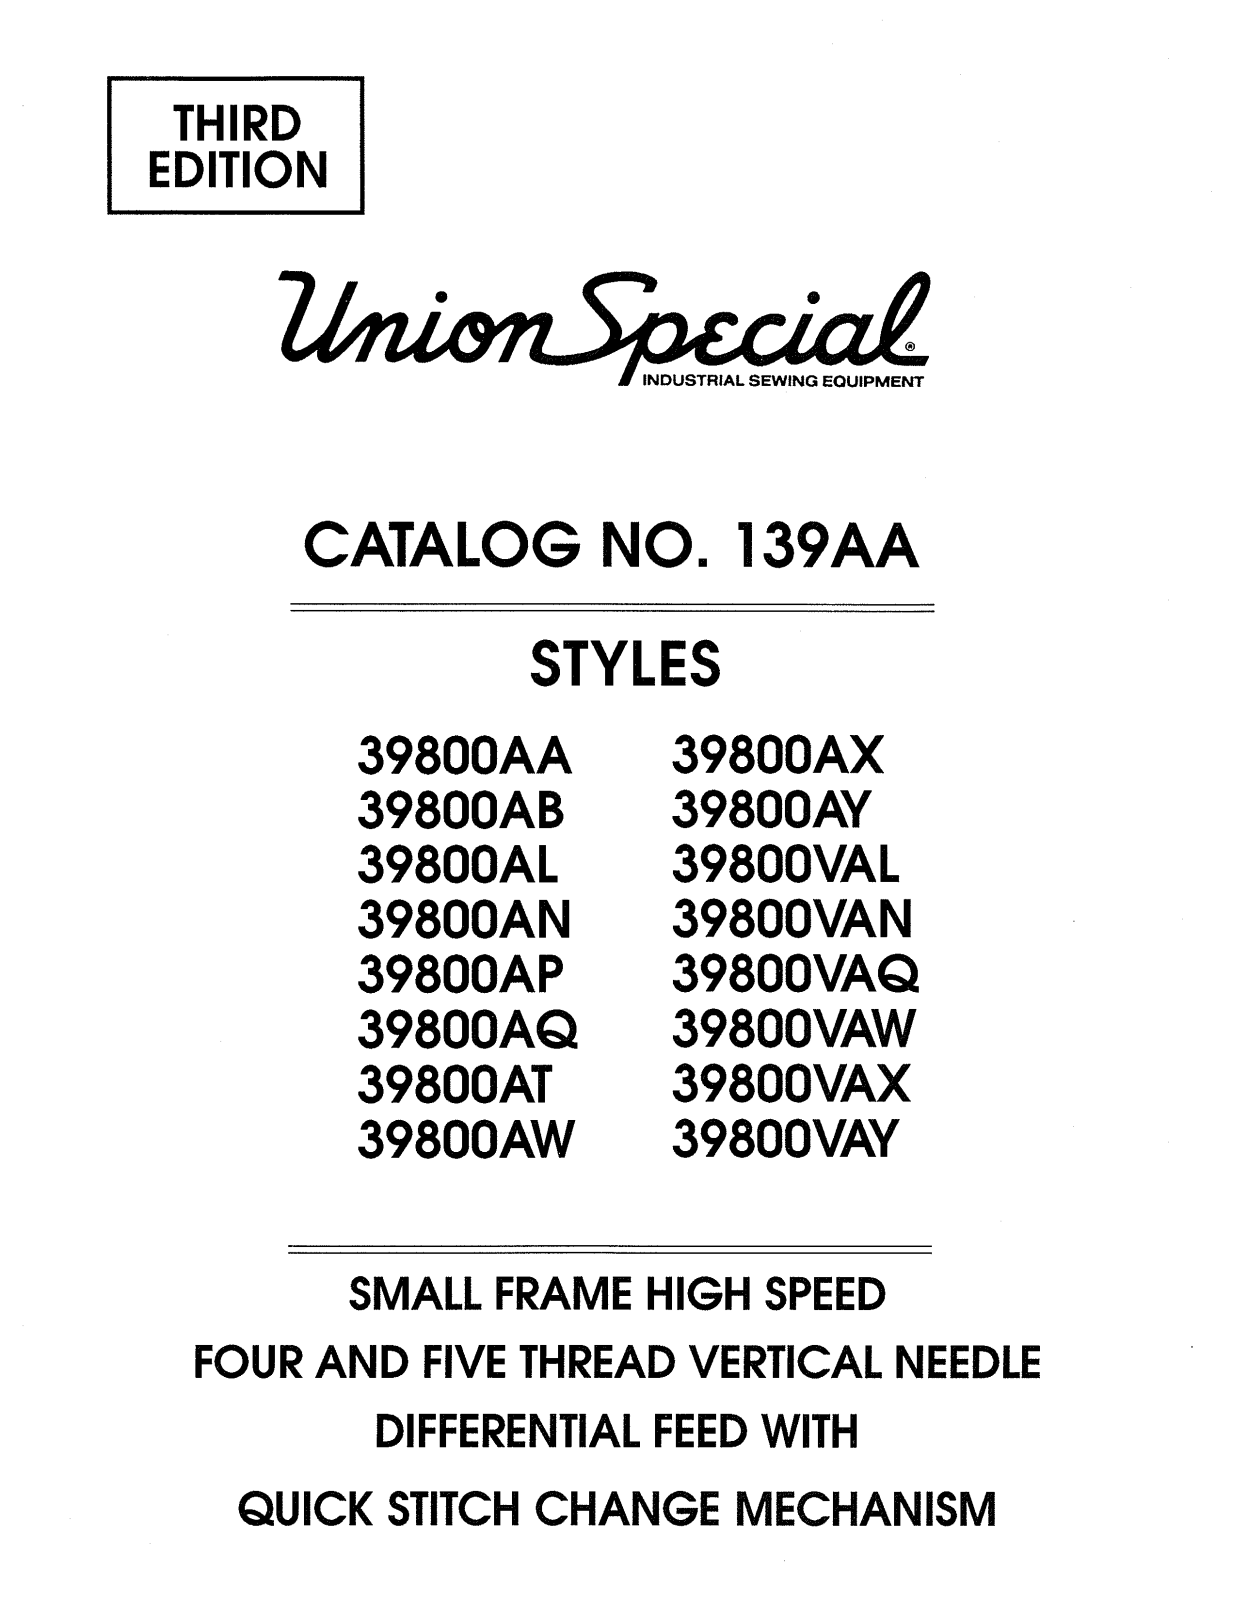 Union Special 39800AA, 39800AB, 39800AL, 39800AN, 39800AP Parts List